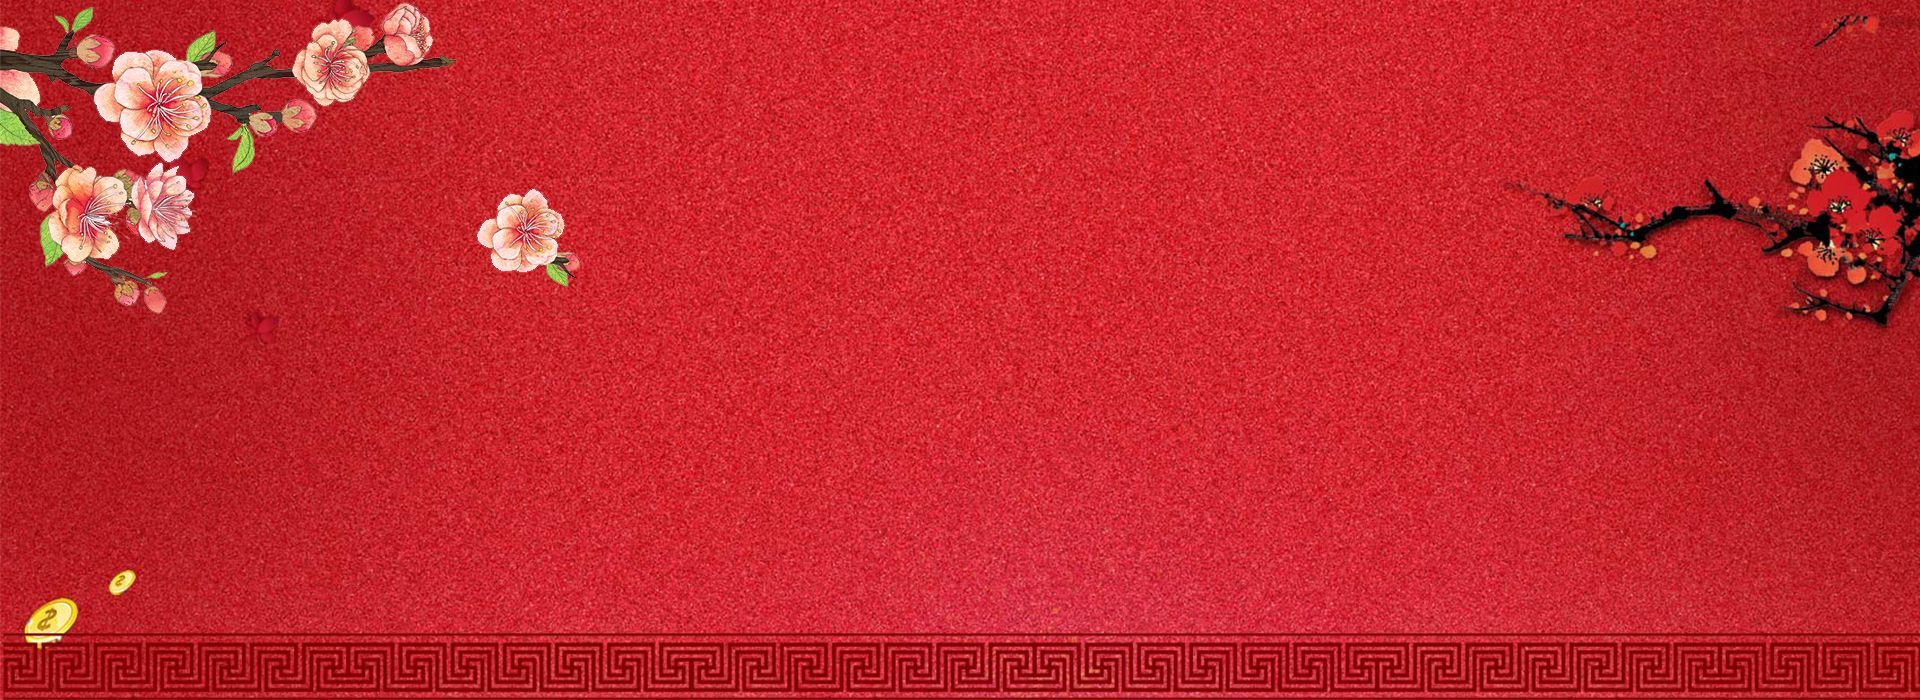 Wallpaper Chinese New Year Red Backgroundwalpaperlist.com